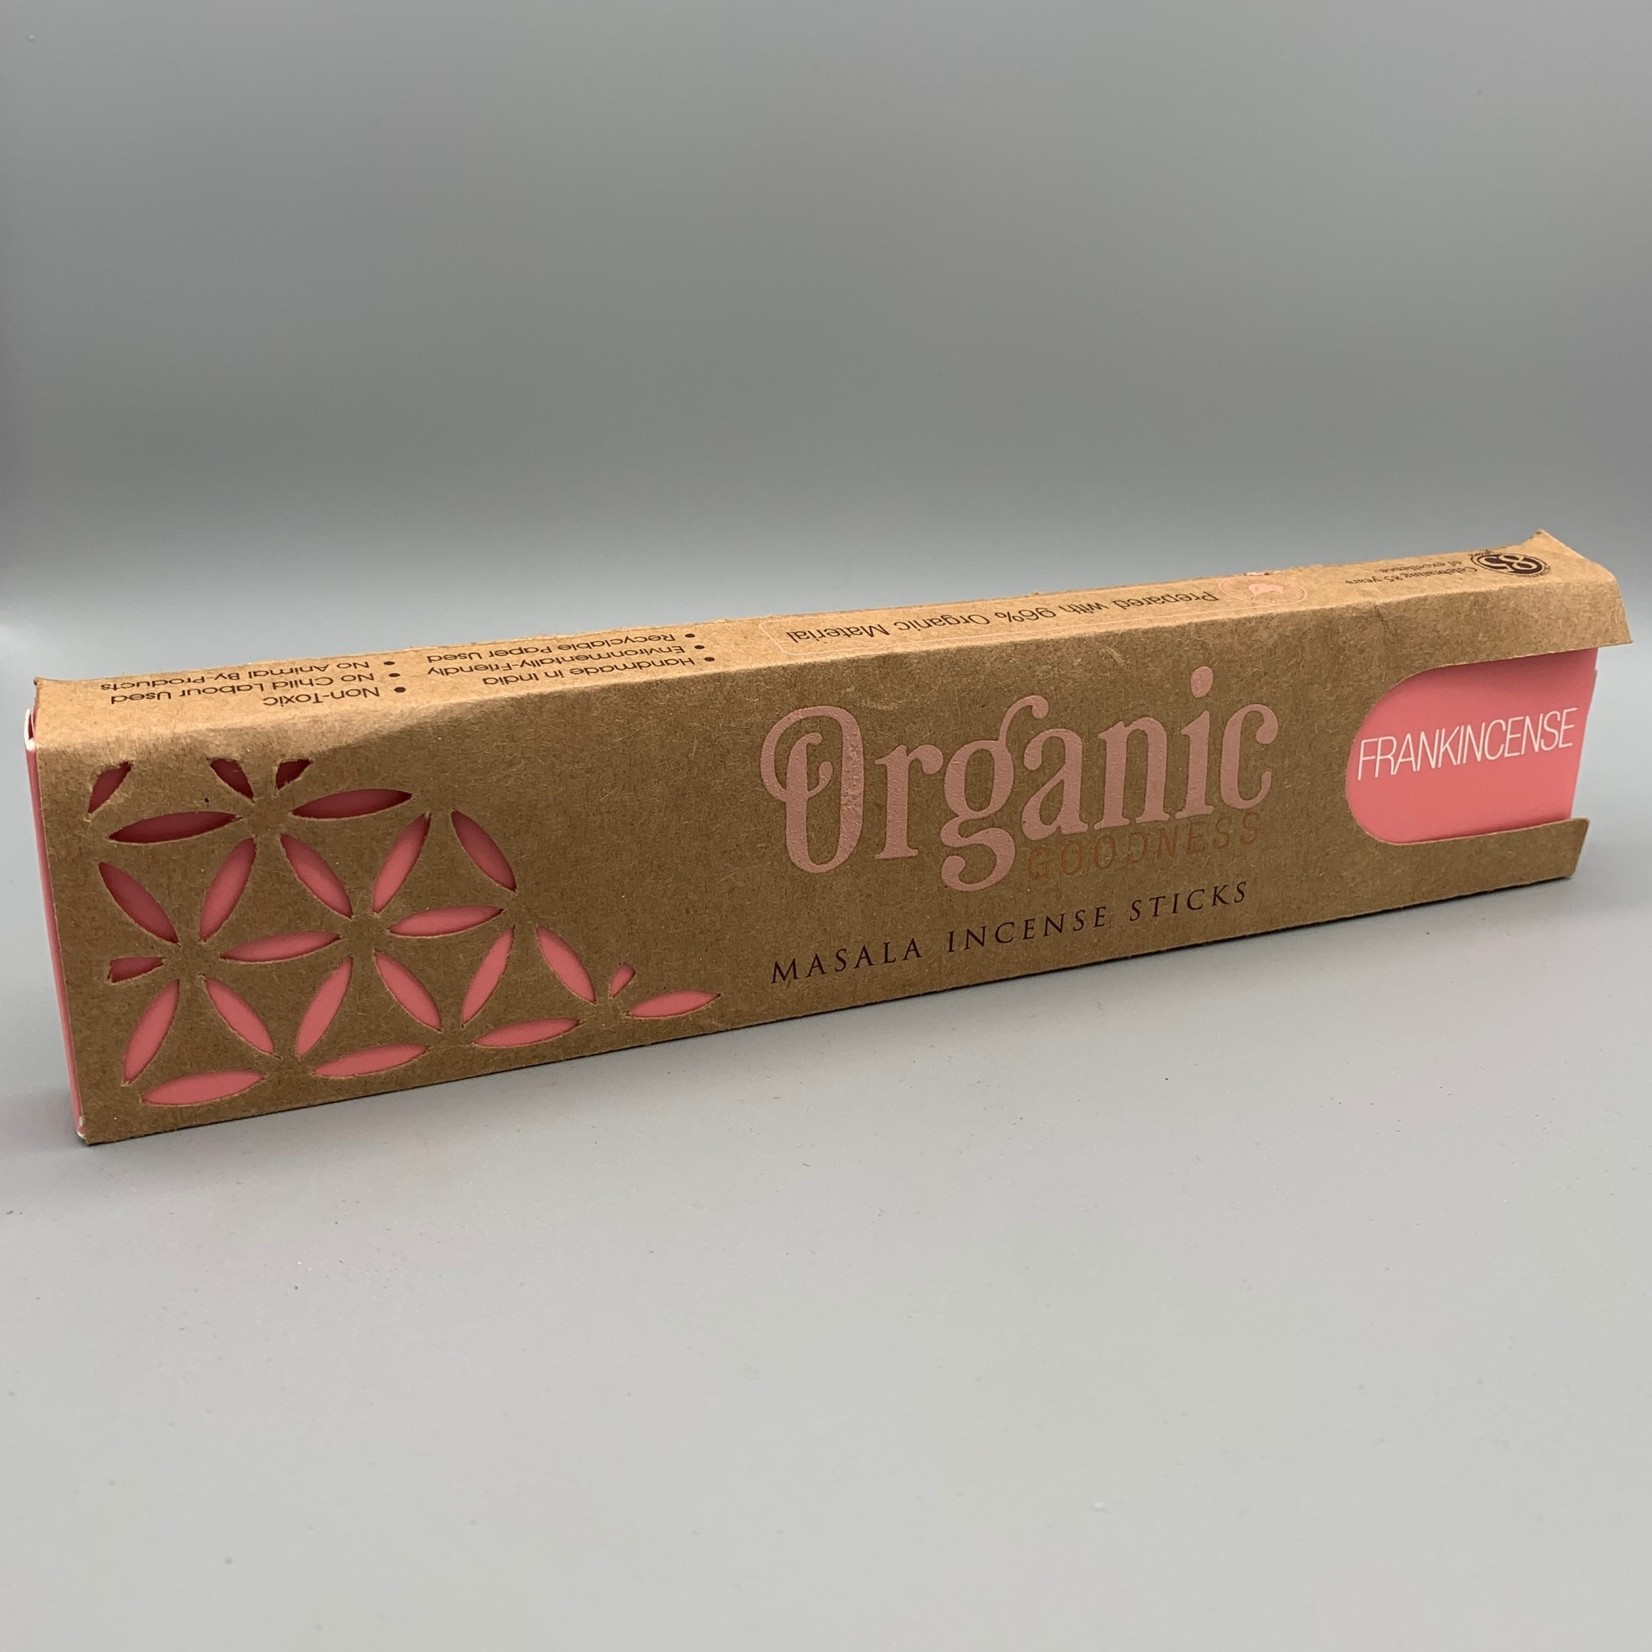 Organic Goodness Masala Incense Sticks: Frankincense